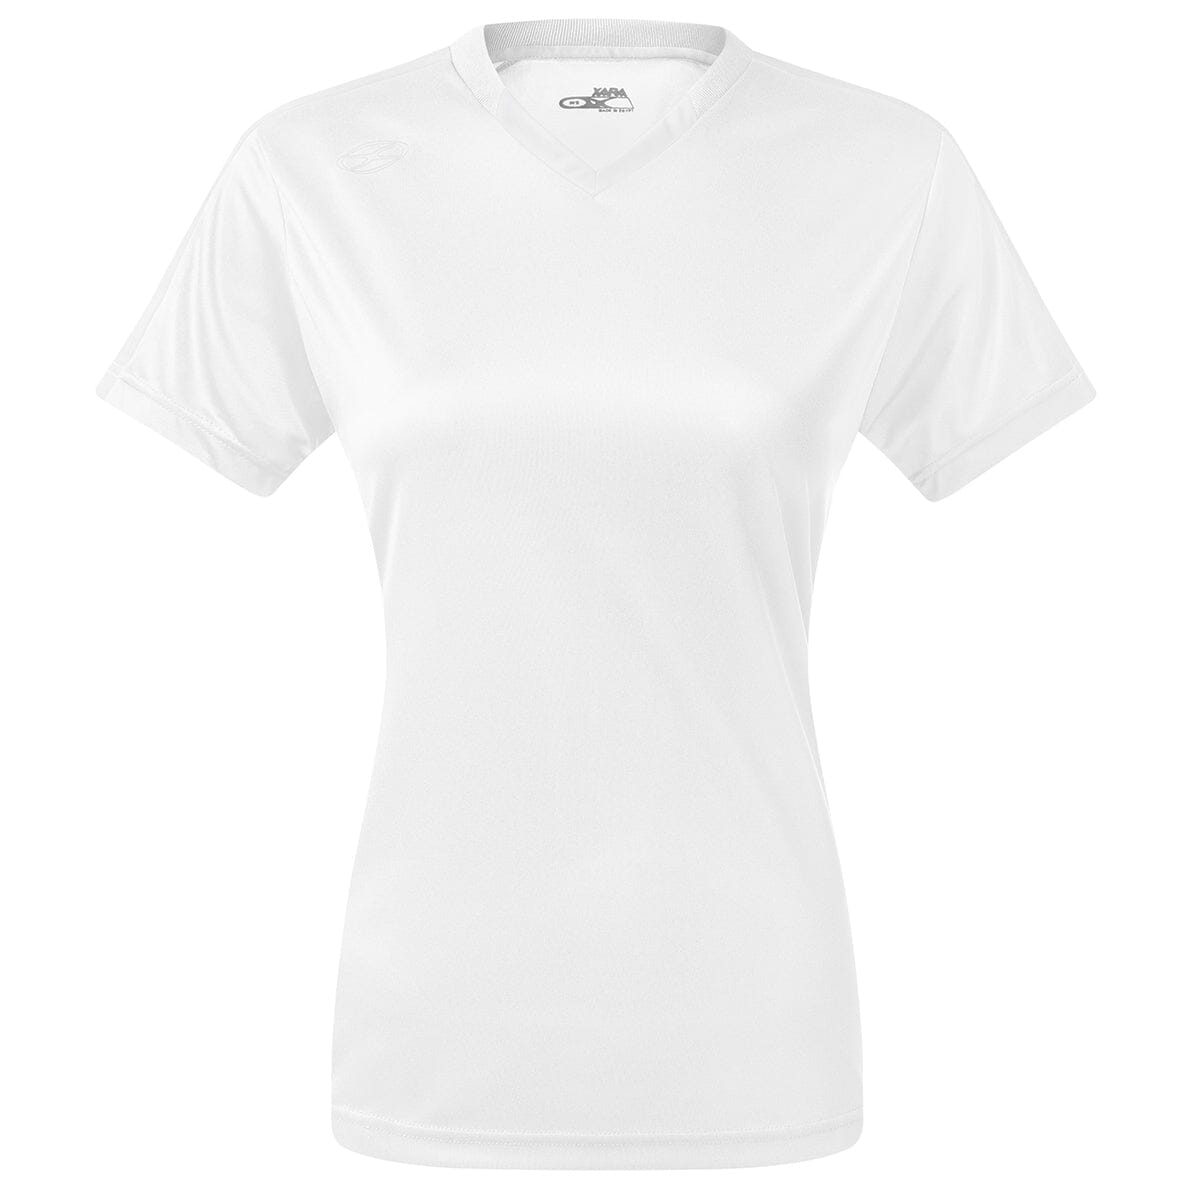 Britannia Jersey - Away Colors - Female Shirt Xara Soccer White/White Womens Small 